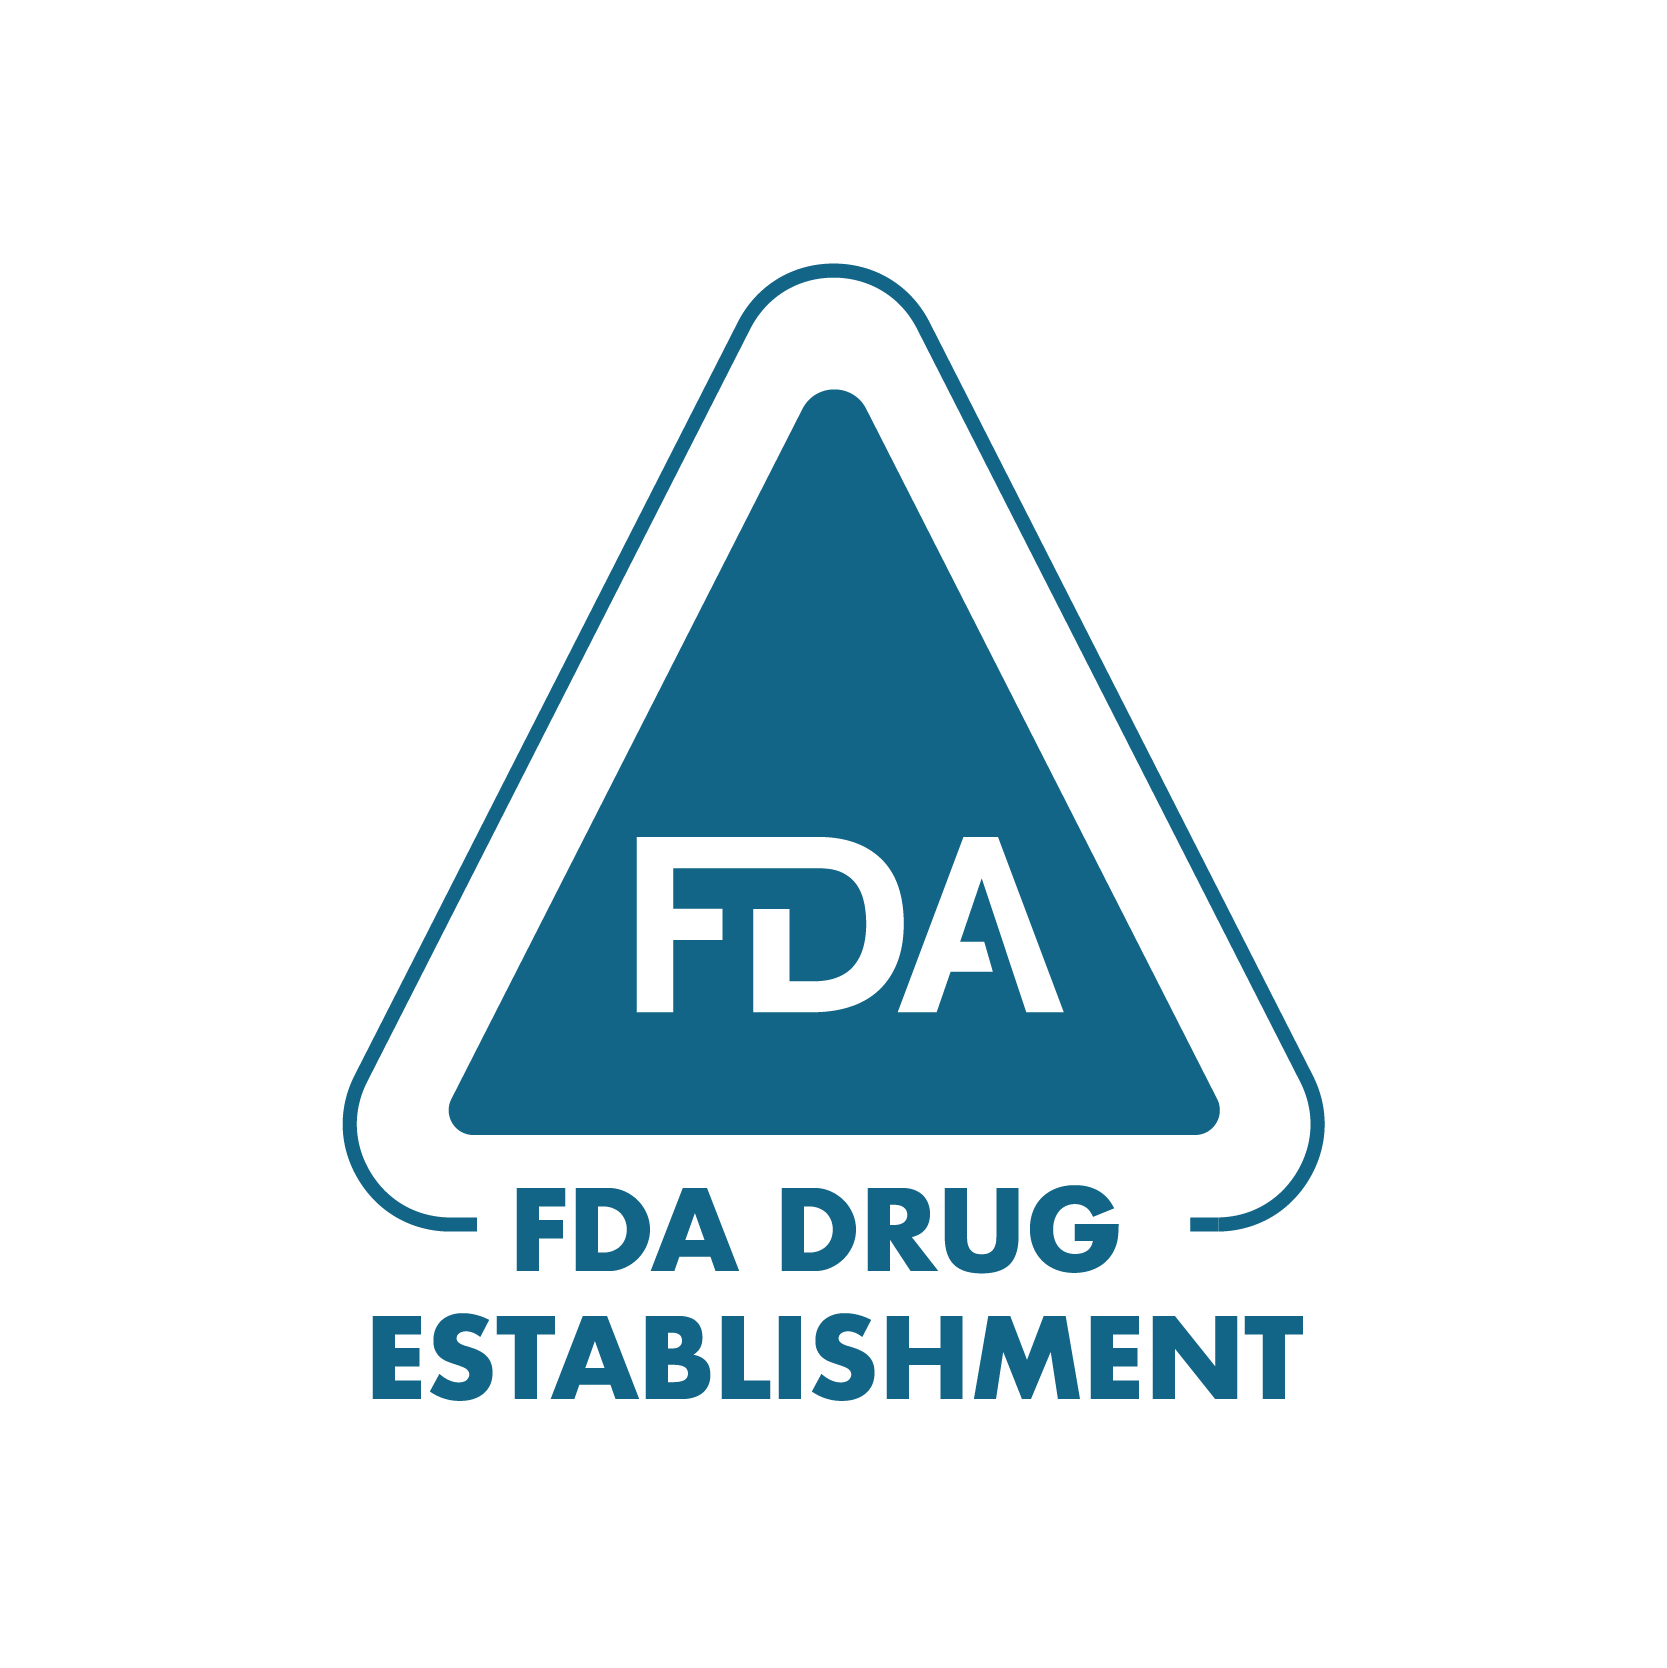 FDA Drug Establishment branded blue icon